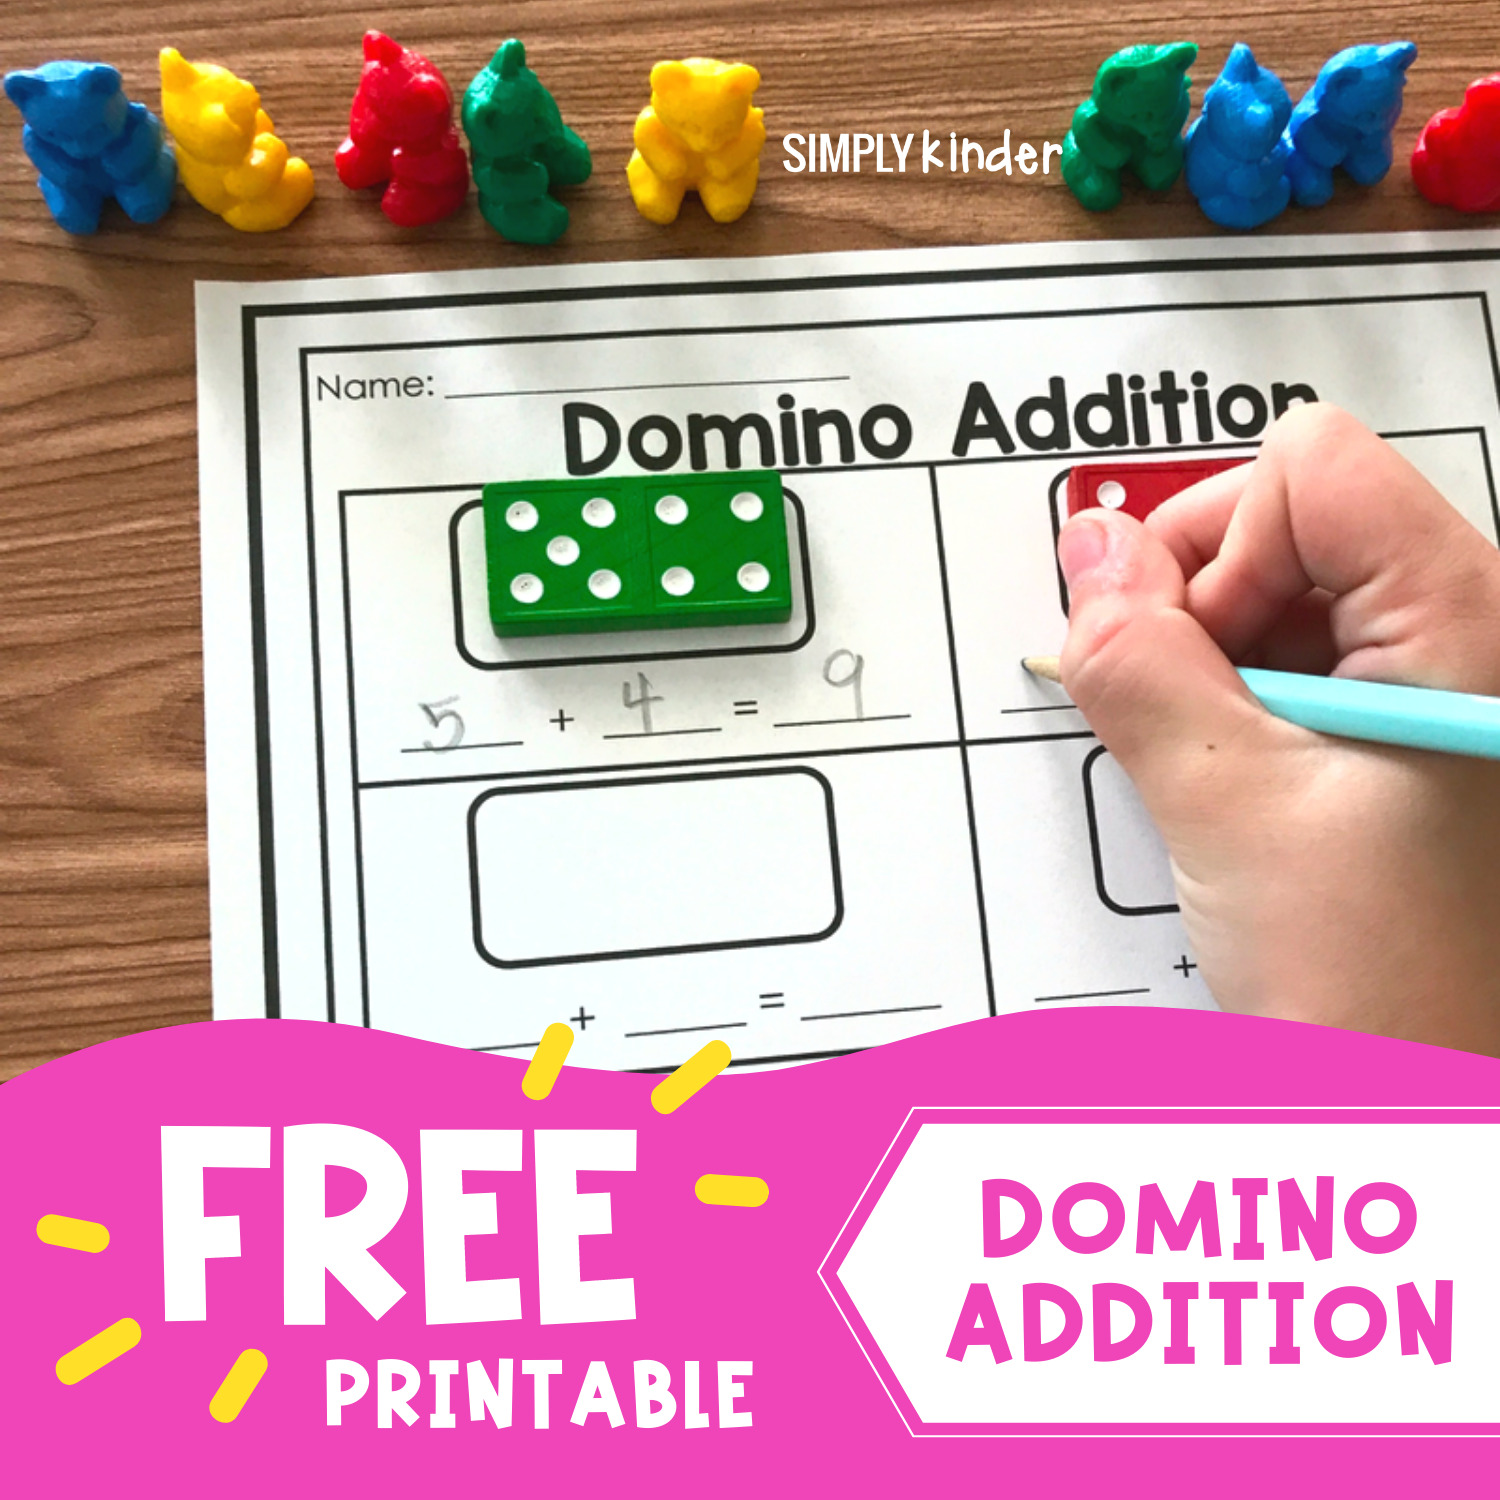 Free printable domino addition